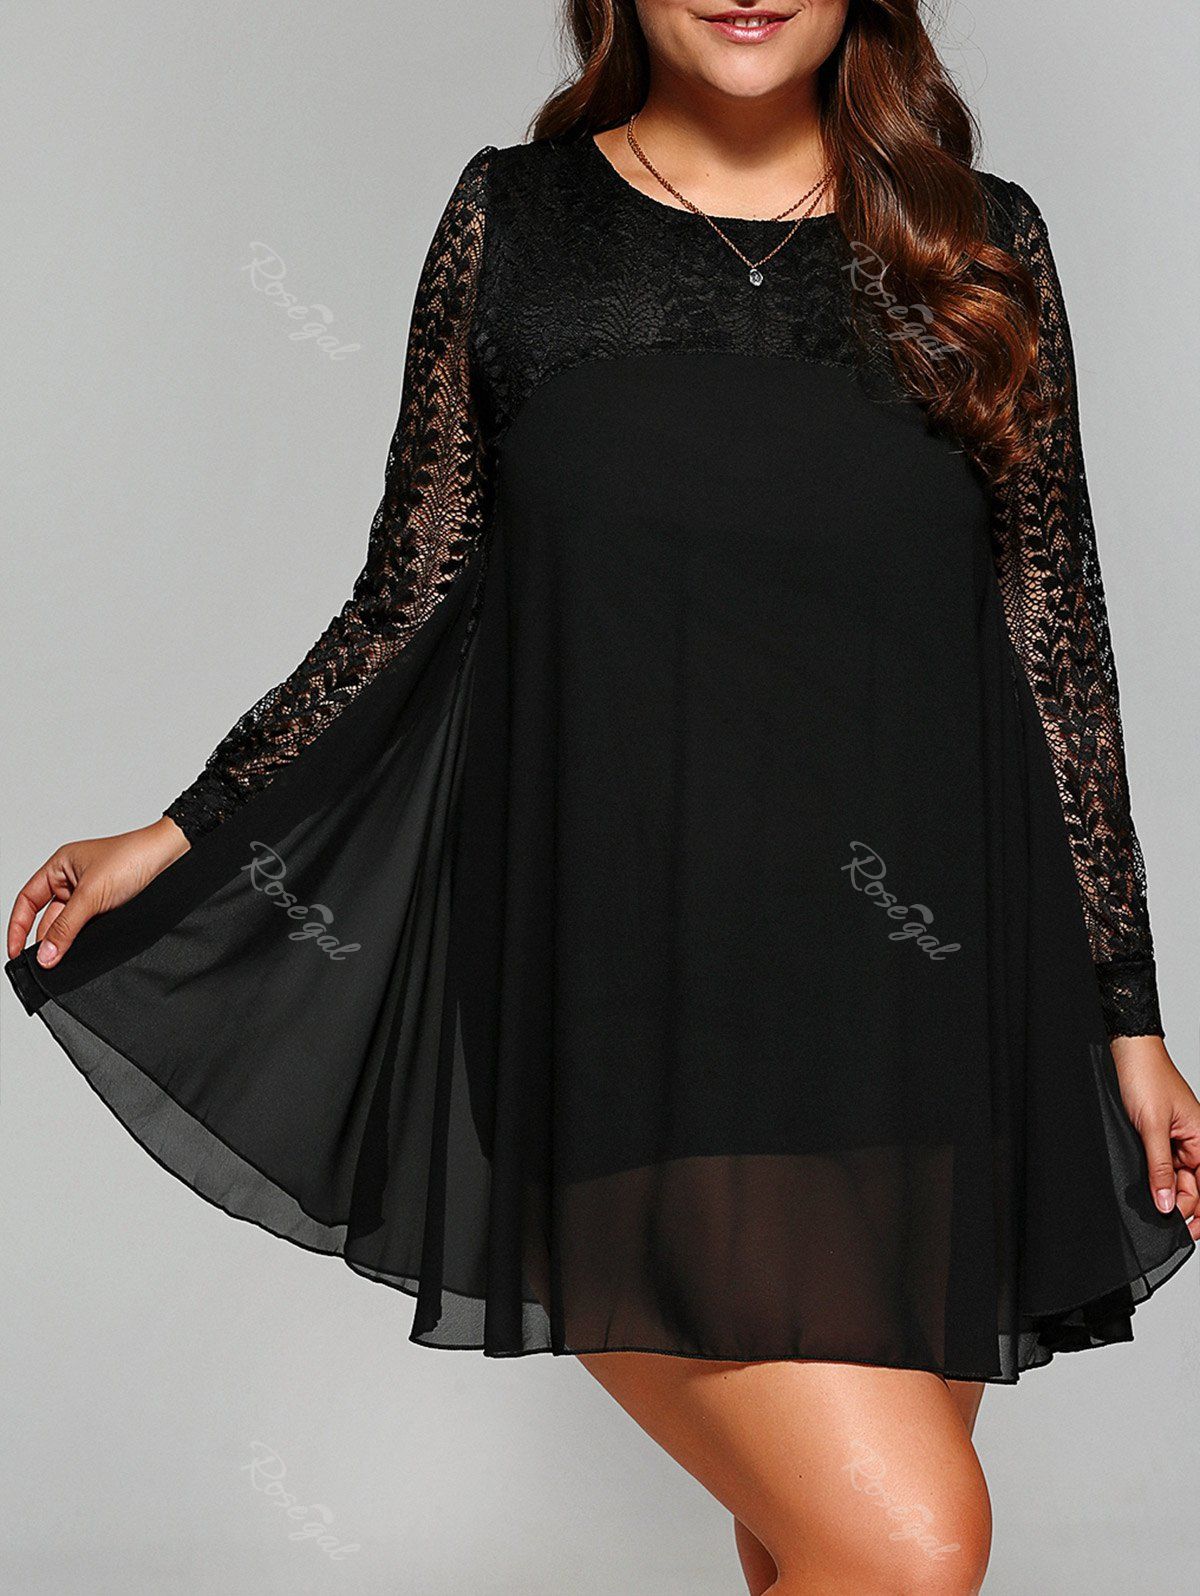 Black Plus Size Lace Splicing Chiffon Dress | RoseGal.com
